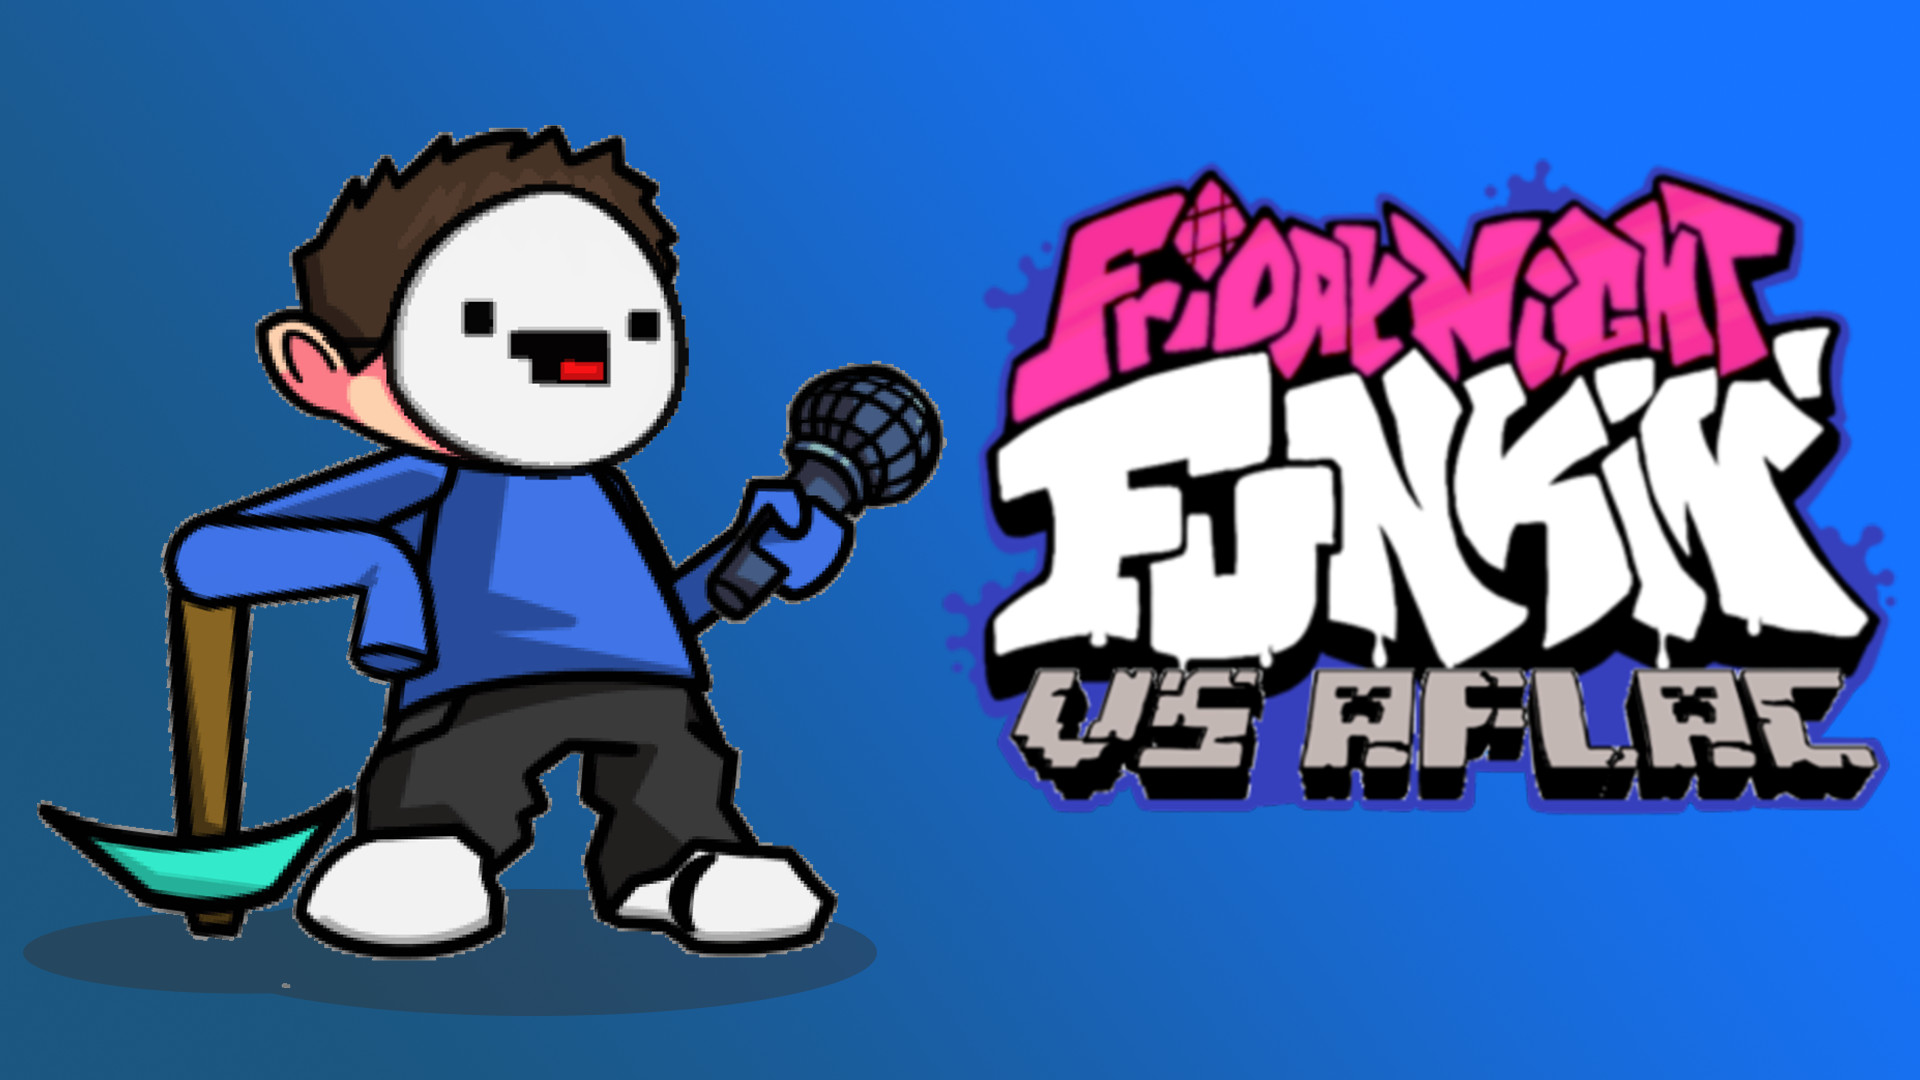 Demos fnf. Aflac FNF Mod. Афлак ФНФ. FNF Aflac Remastered. Friday Night Funkin' vs Aflac Remastered.